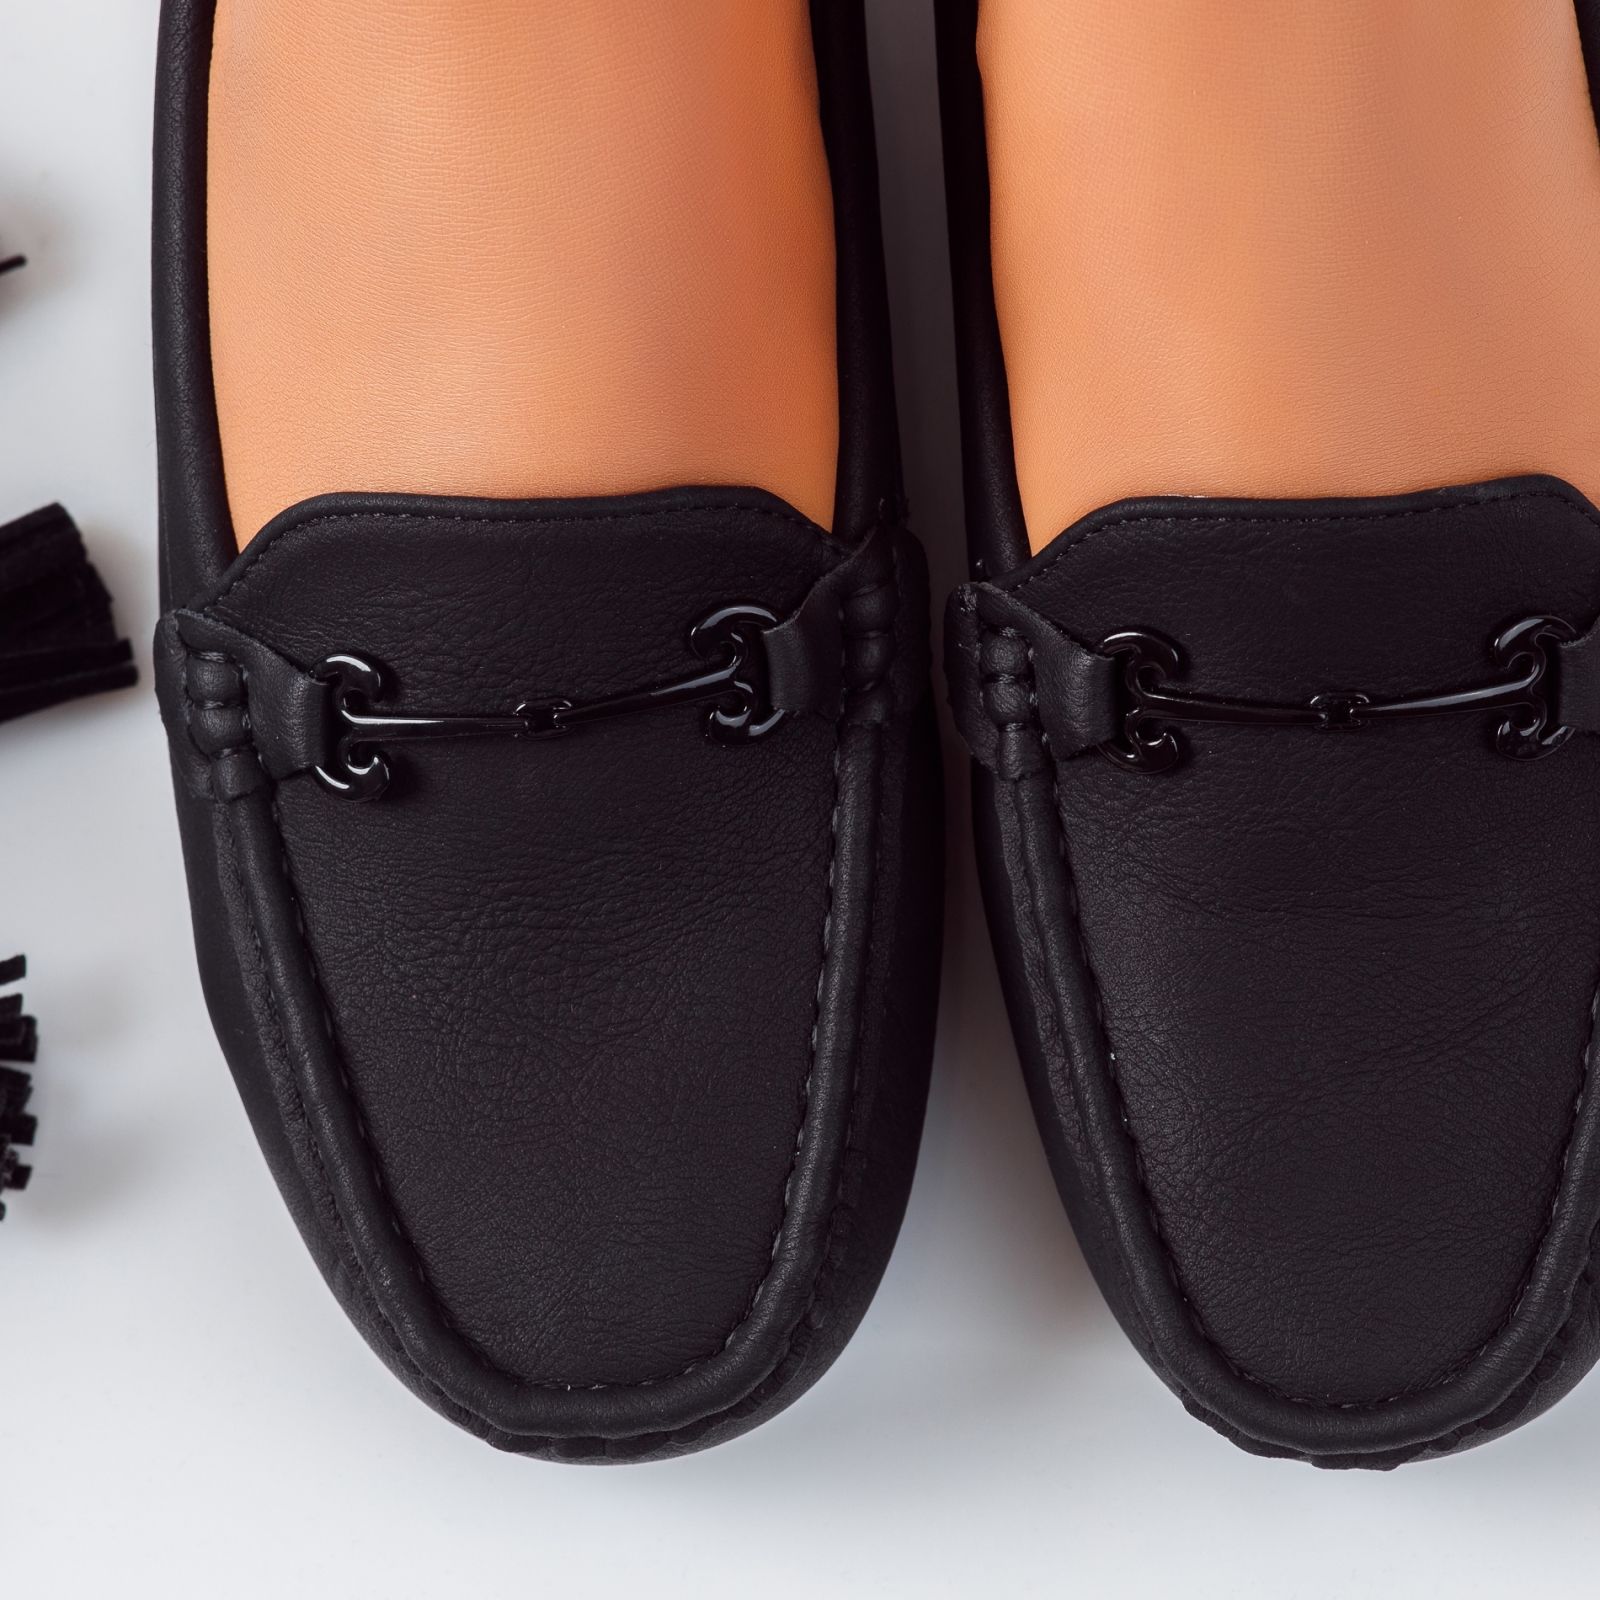 Alkalmi cipő fekete Saylor #5361M